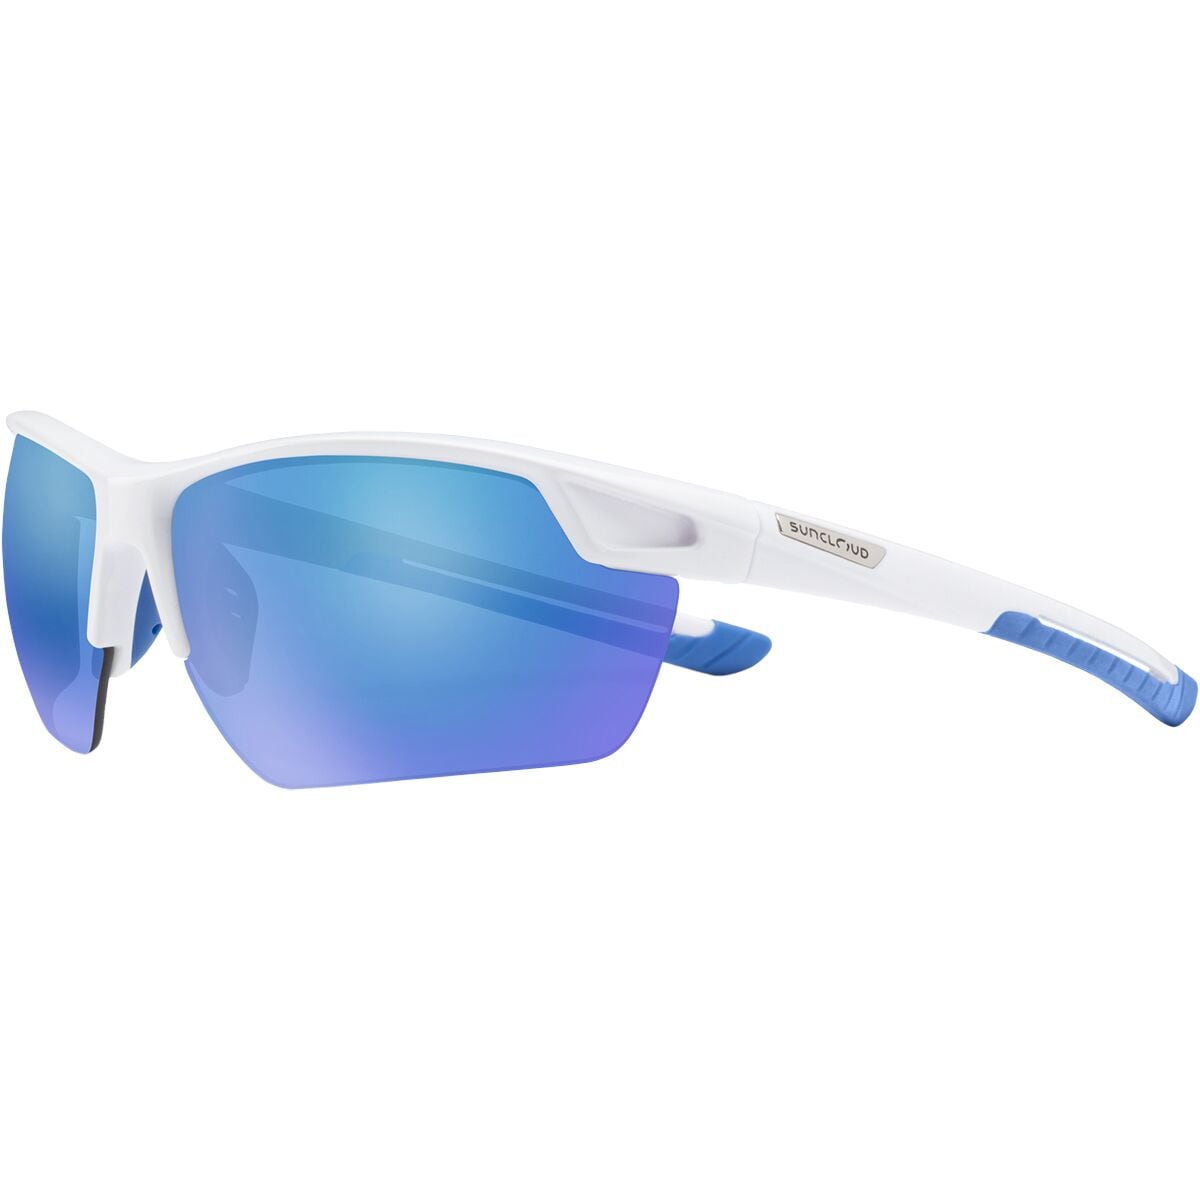 Поляризованные солнцезащитные очки contender Suncloud Polarized Optics, цвет white/polar blue2 mirror очки солнцезащитные stylemark polarized l1505d